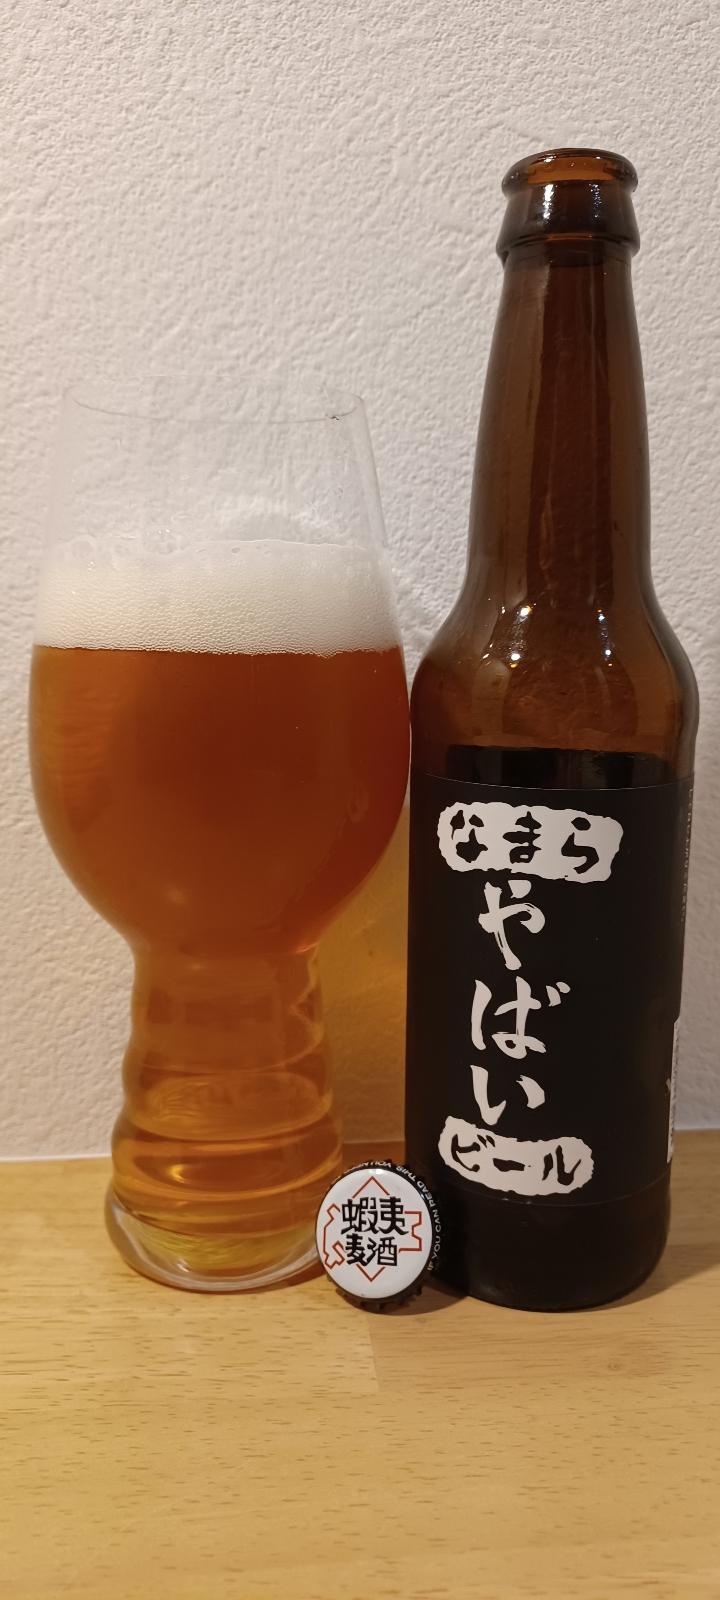 Namara Yabai Beer (Caldera